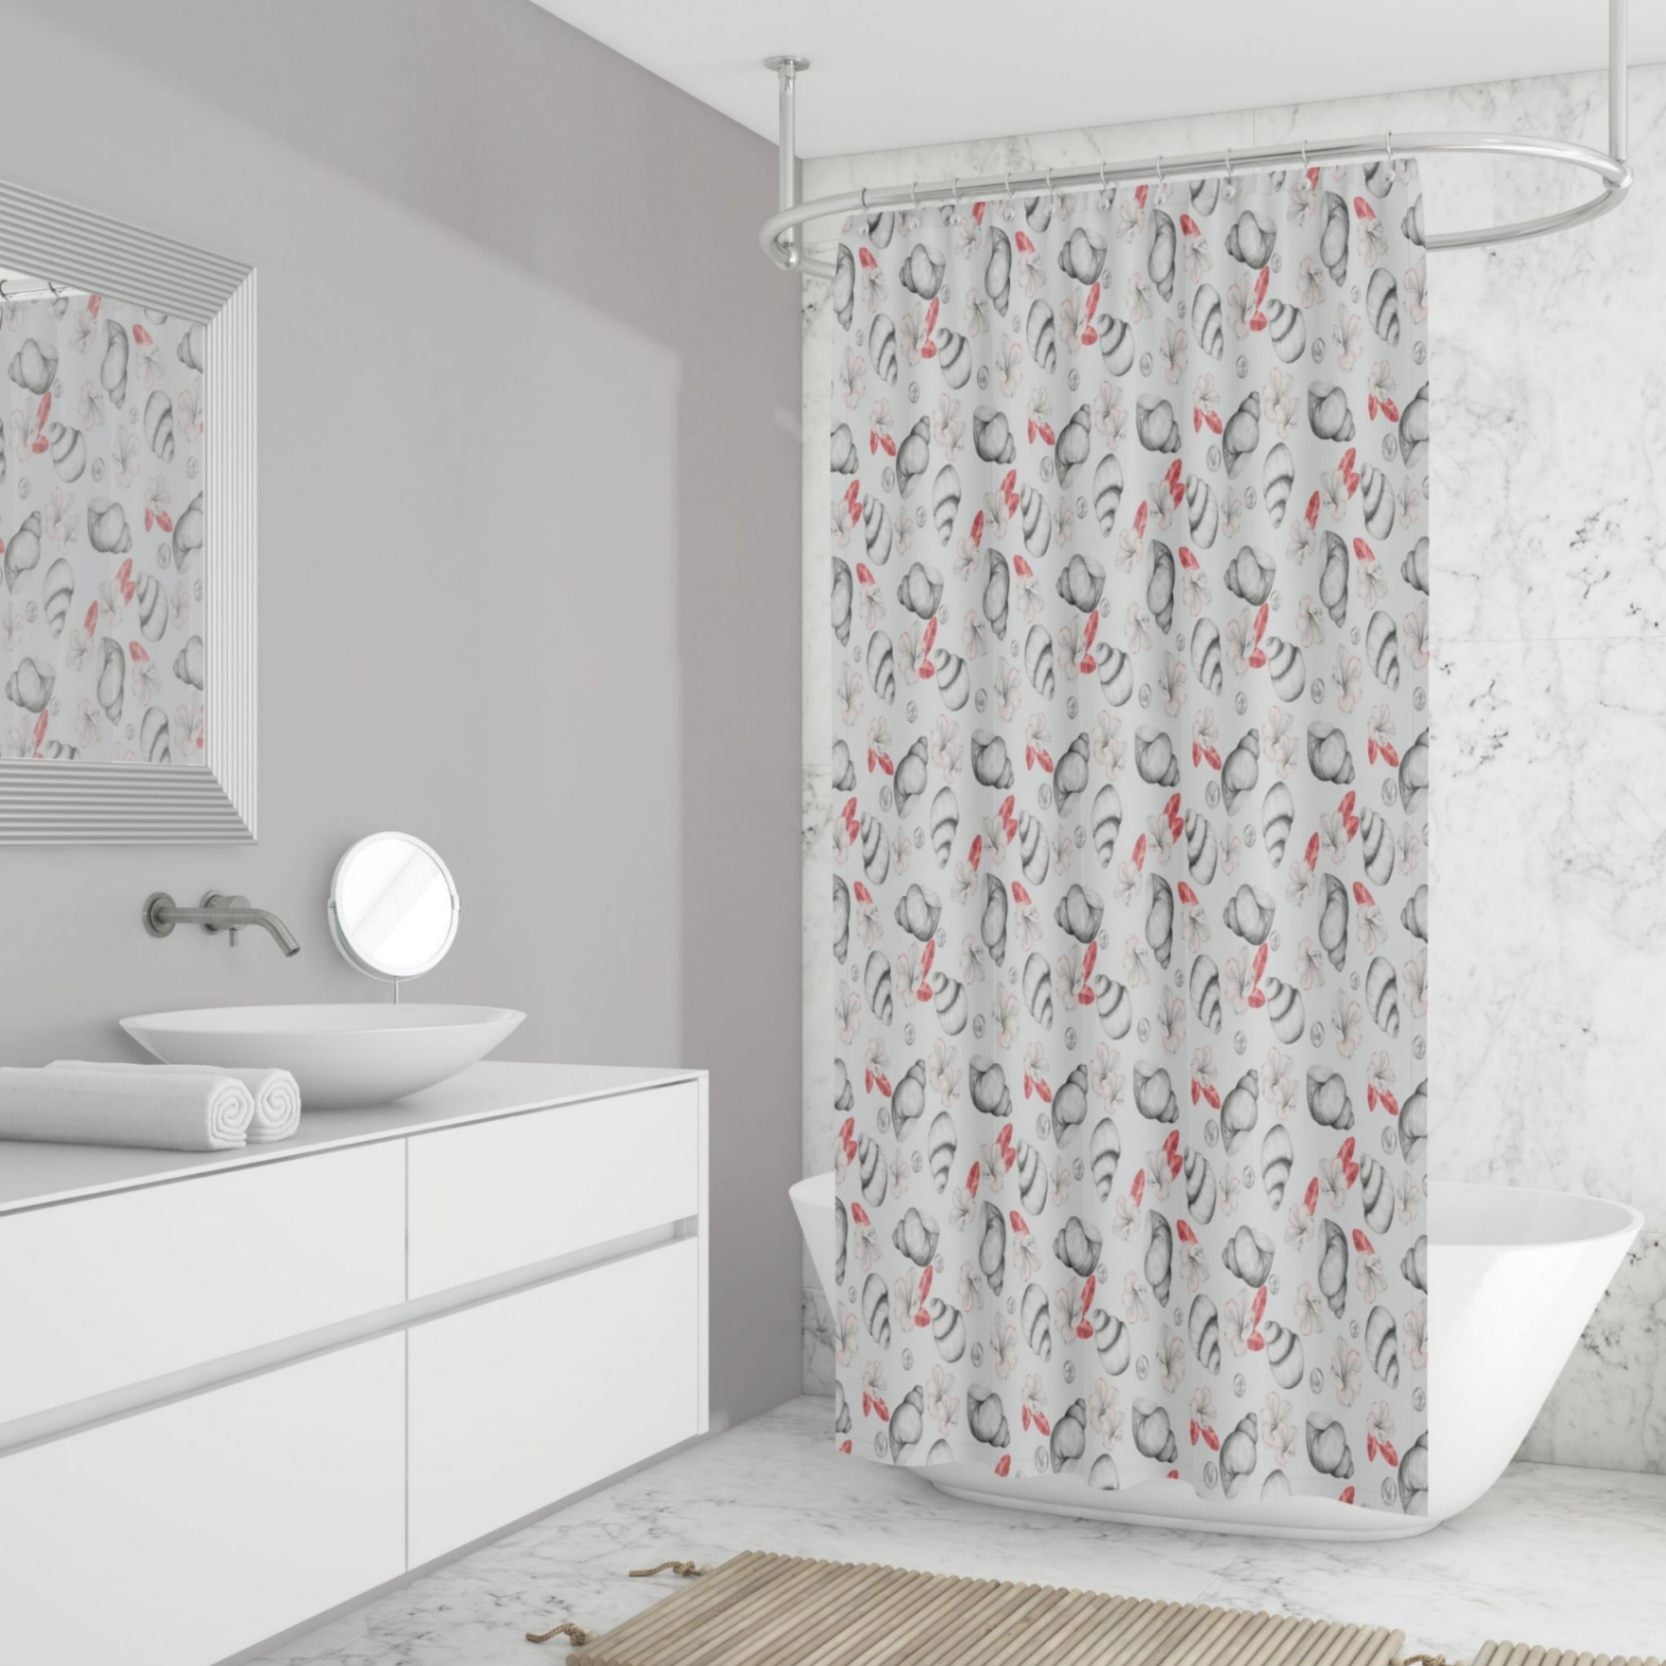 Seashells Hideaway Shower Curtains - ZumBuys